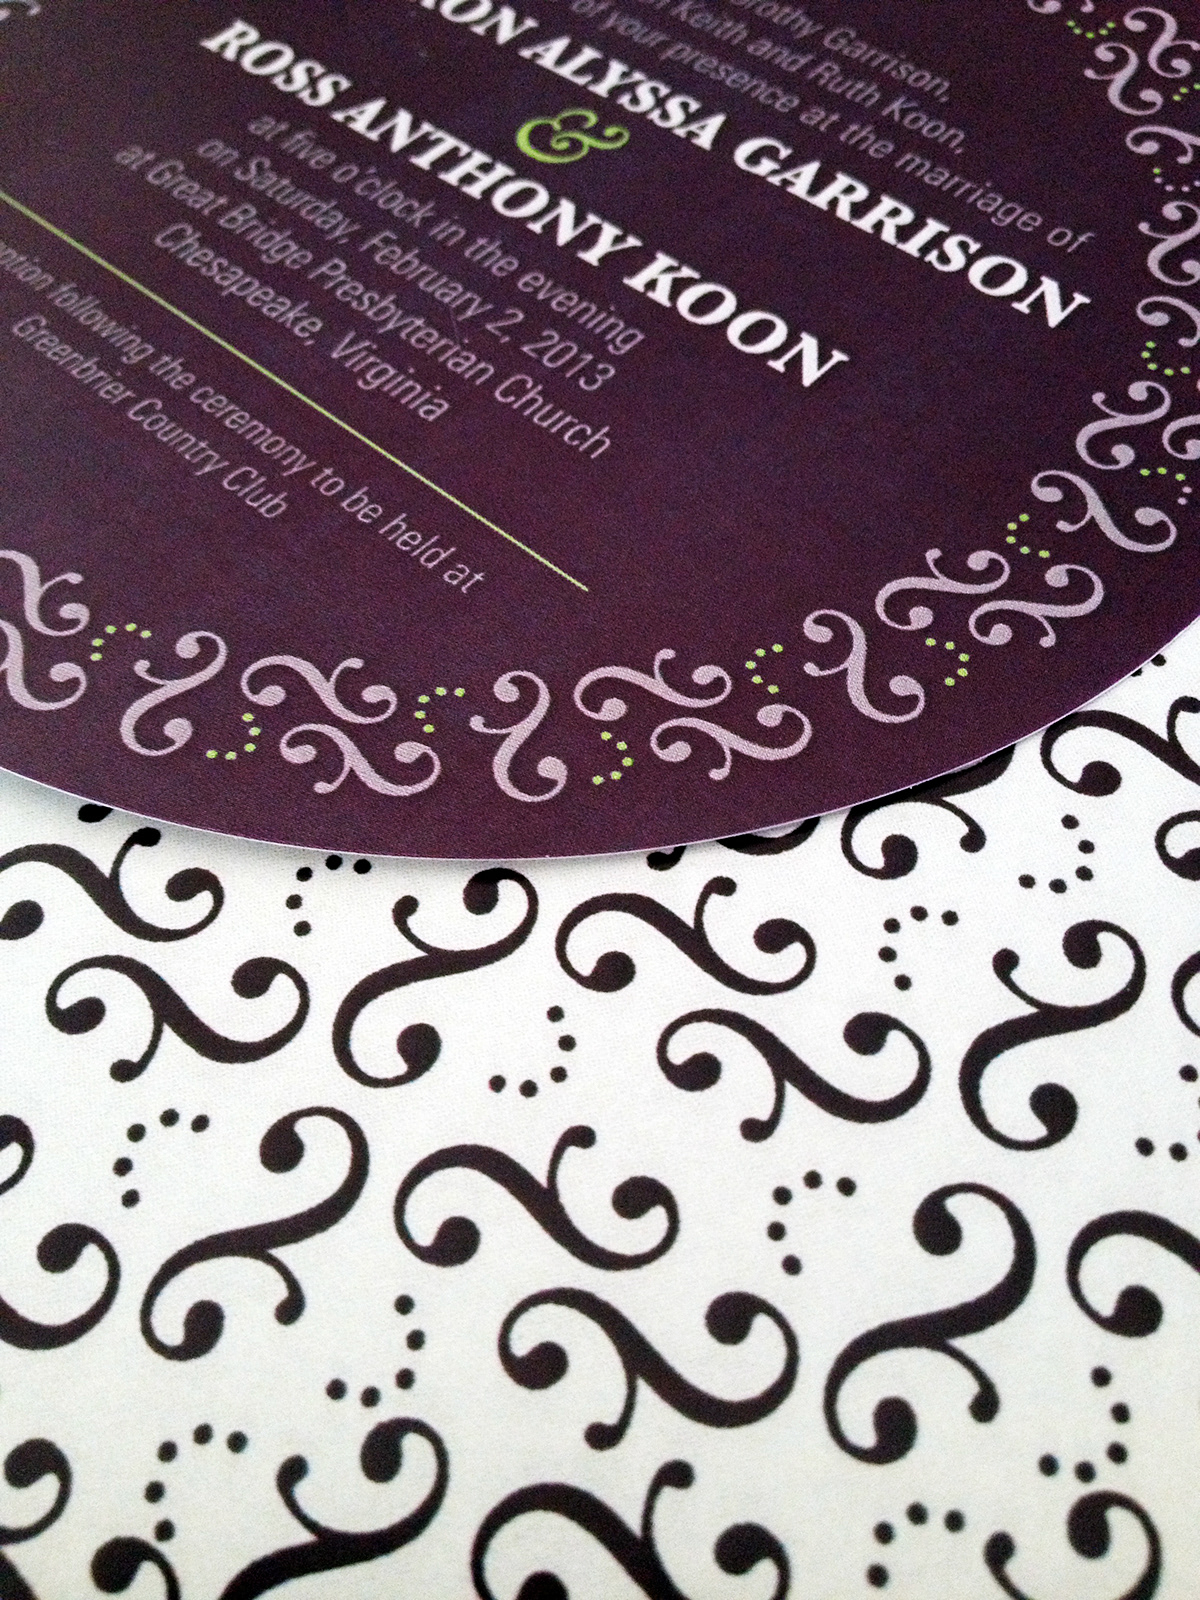 wedding wedding stationery Stationery print die cut pattern Invitation